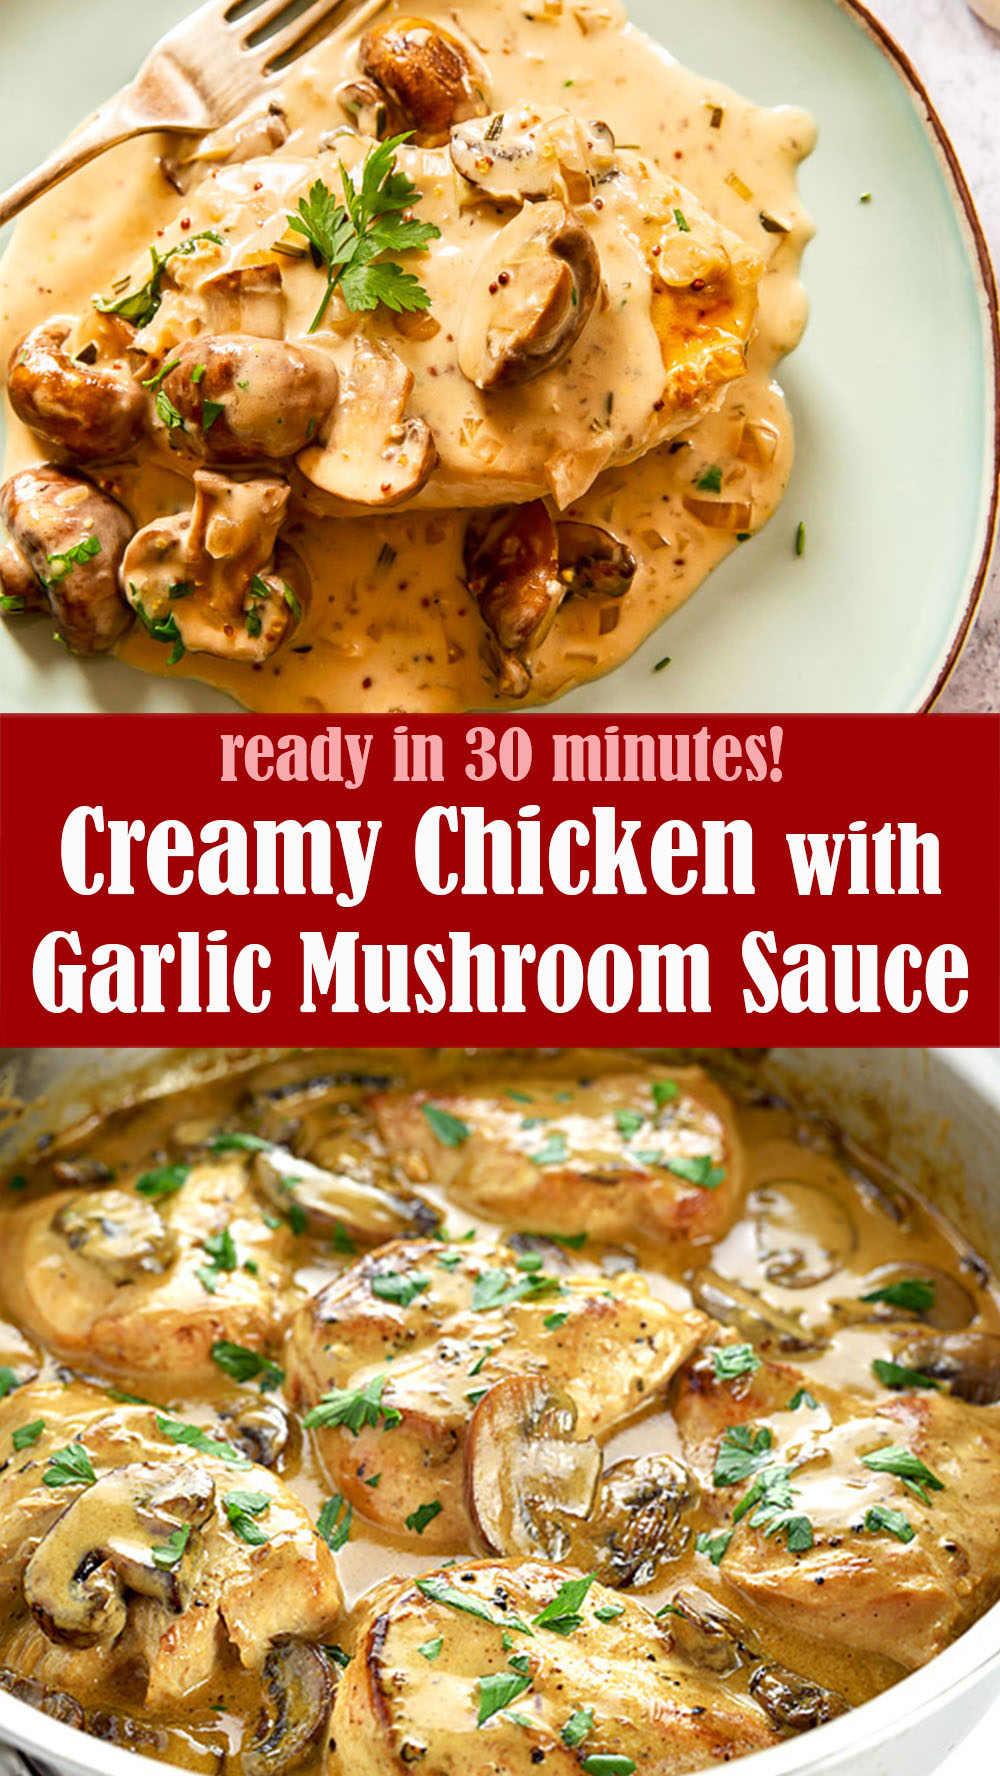 Creamy Chicken with Garlic Mushroom Sauce